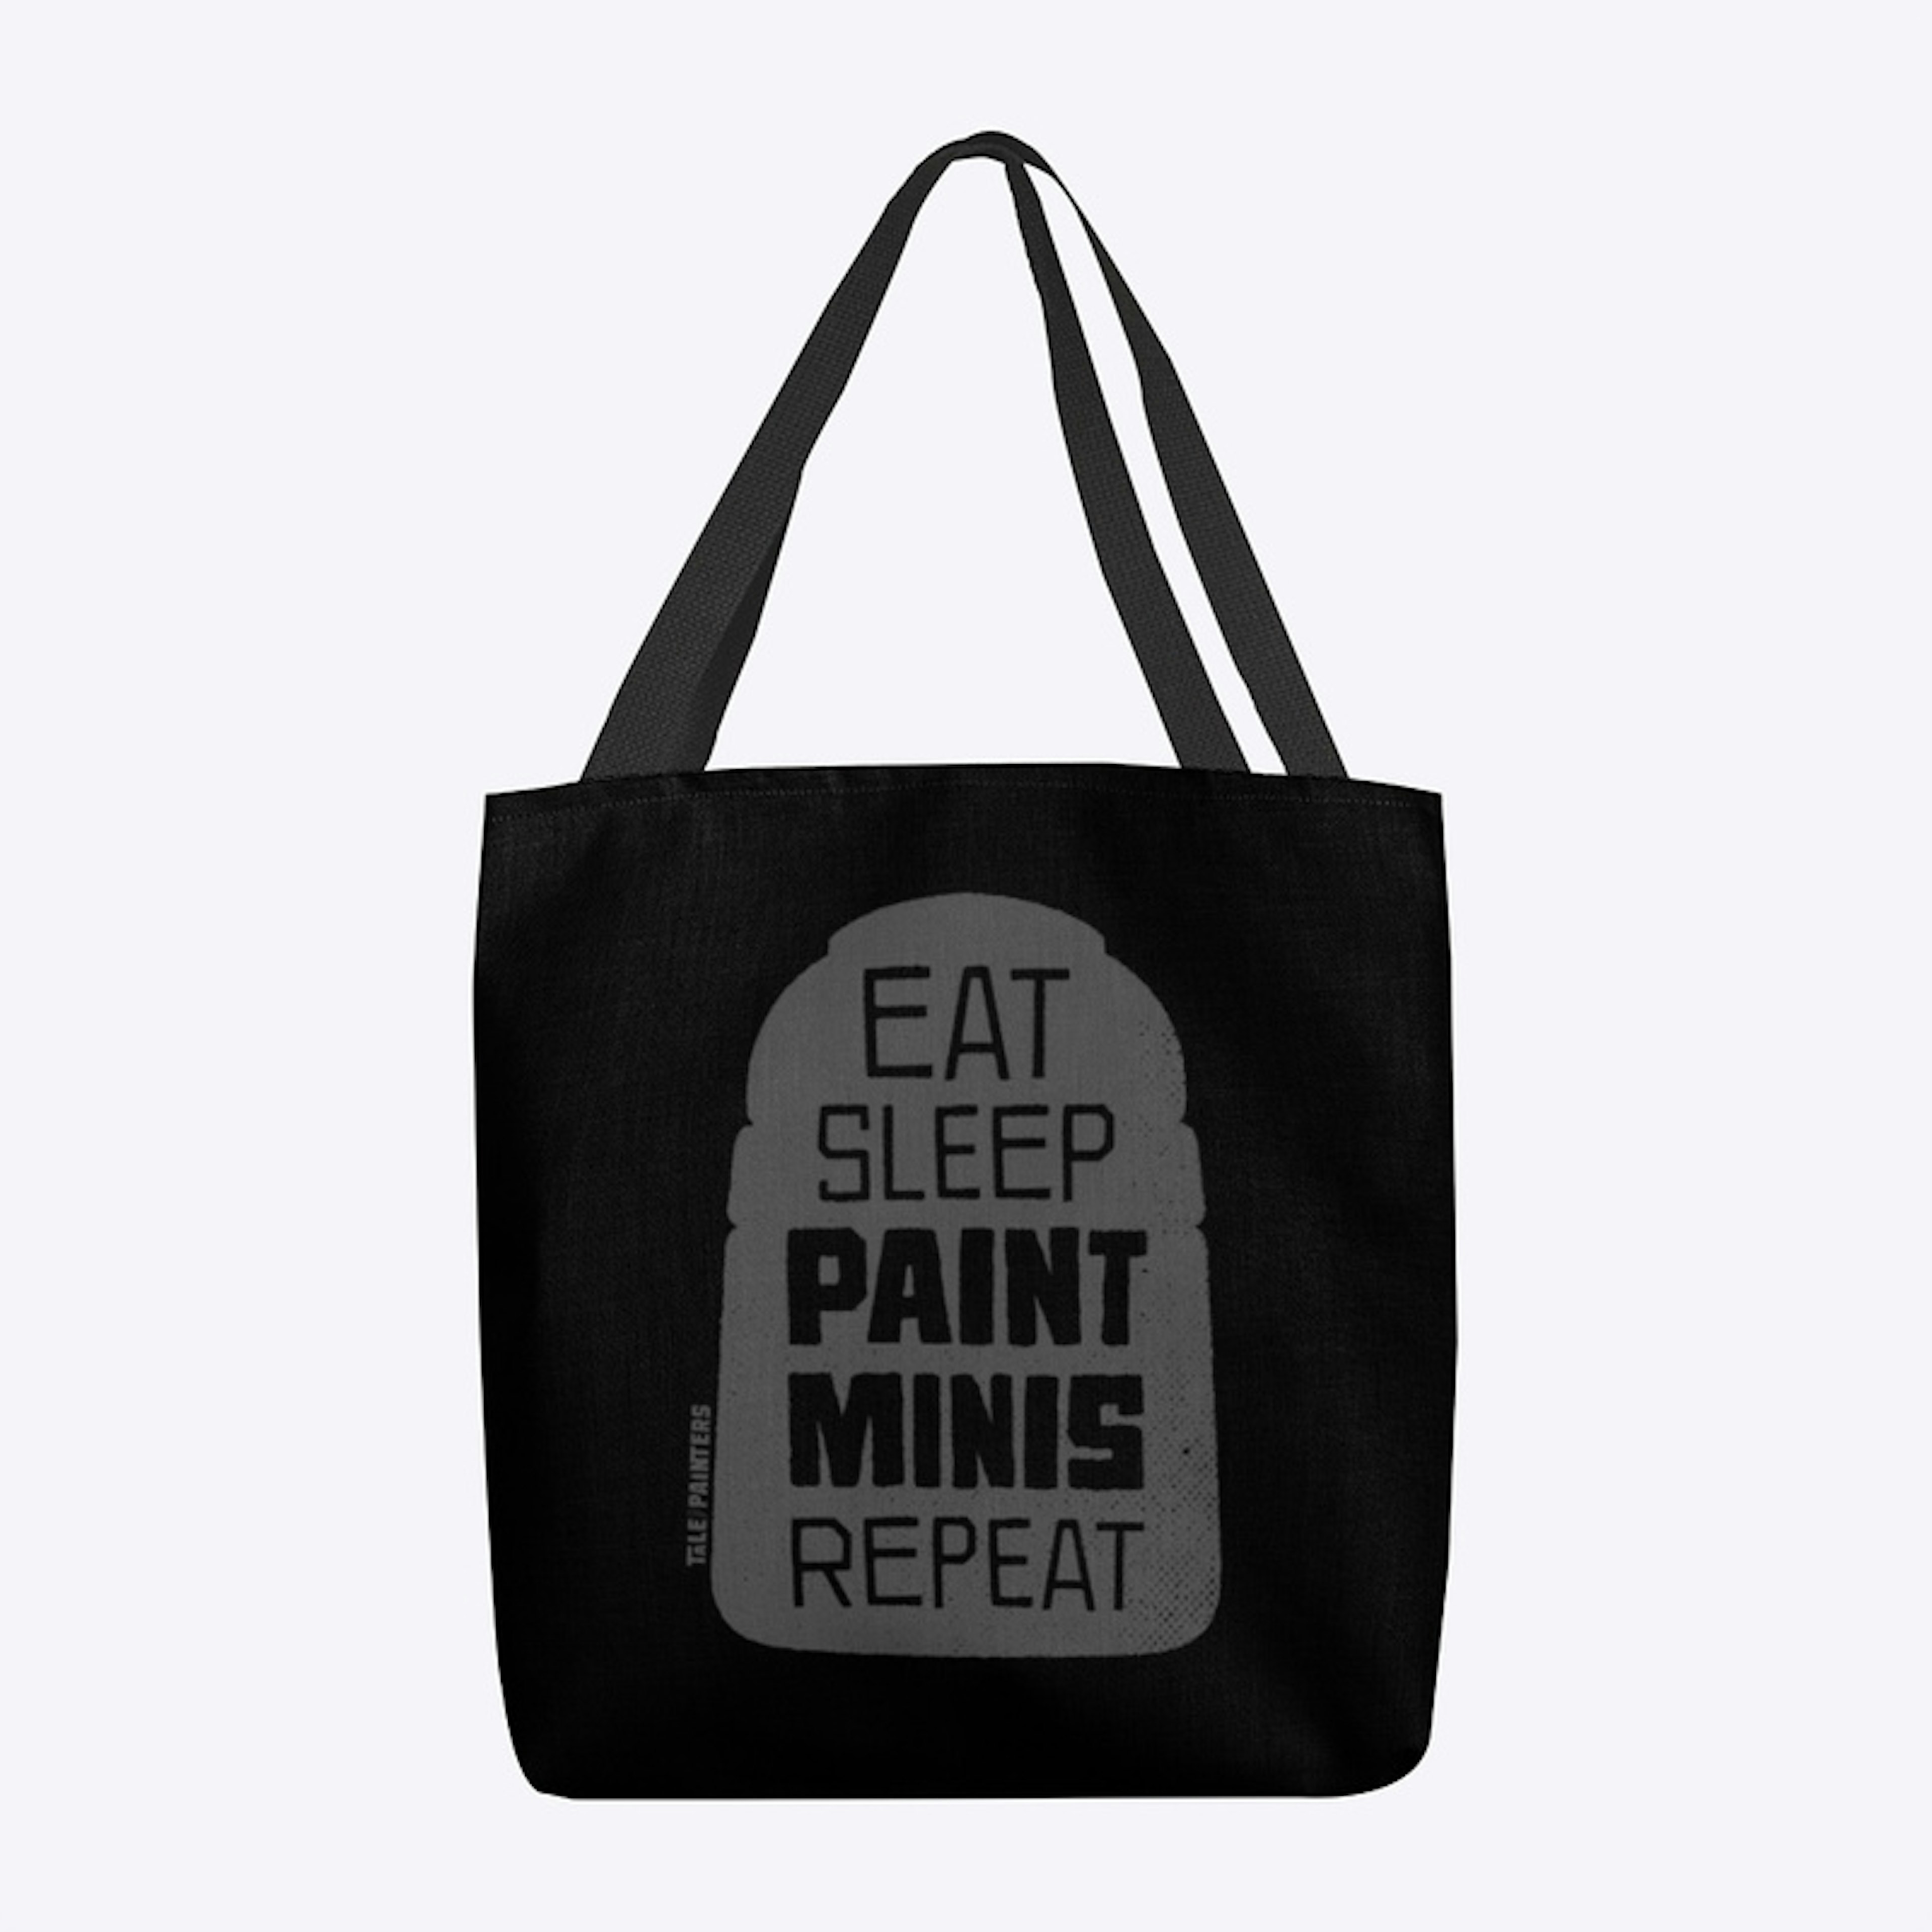 EAT SLEEP PAINT MINIS REPEAT Tote Bag